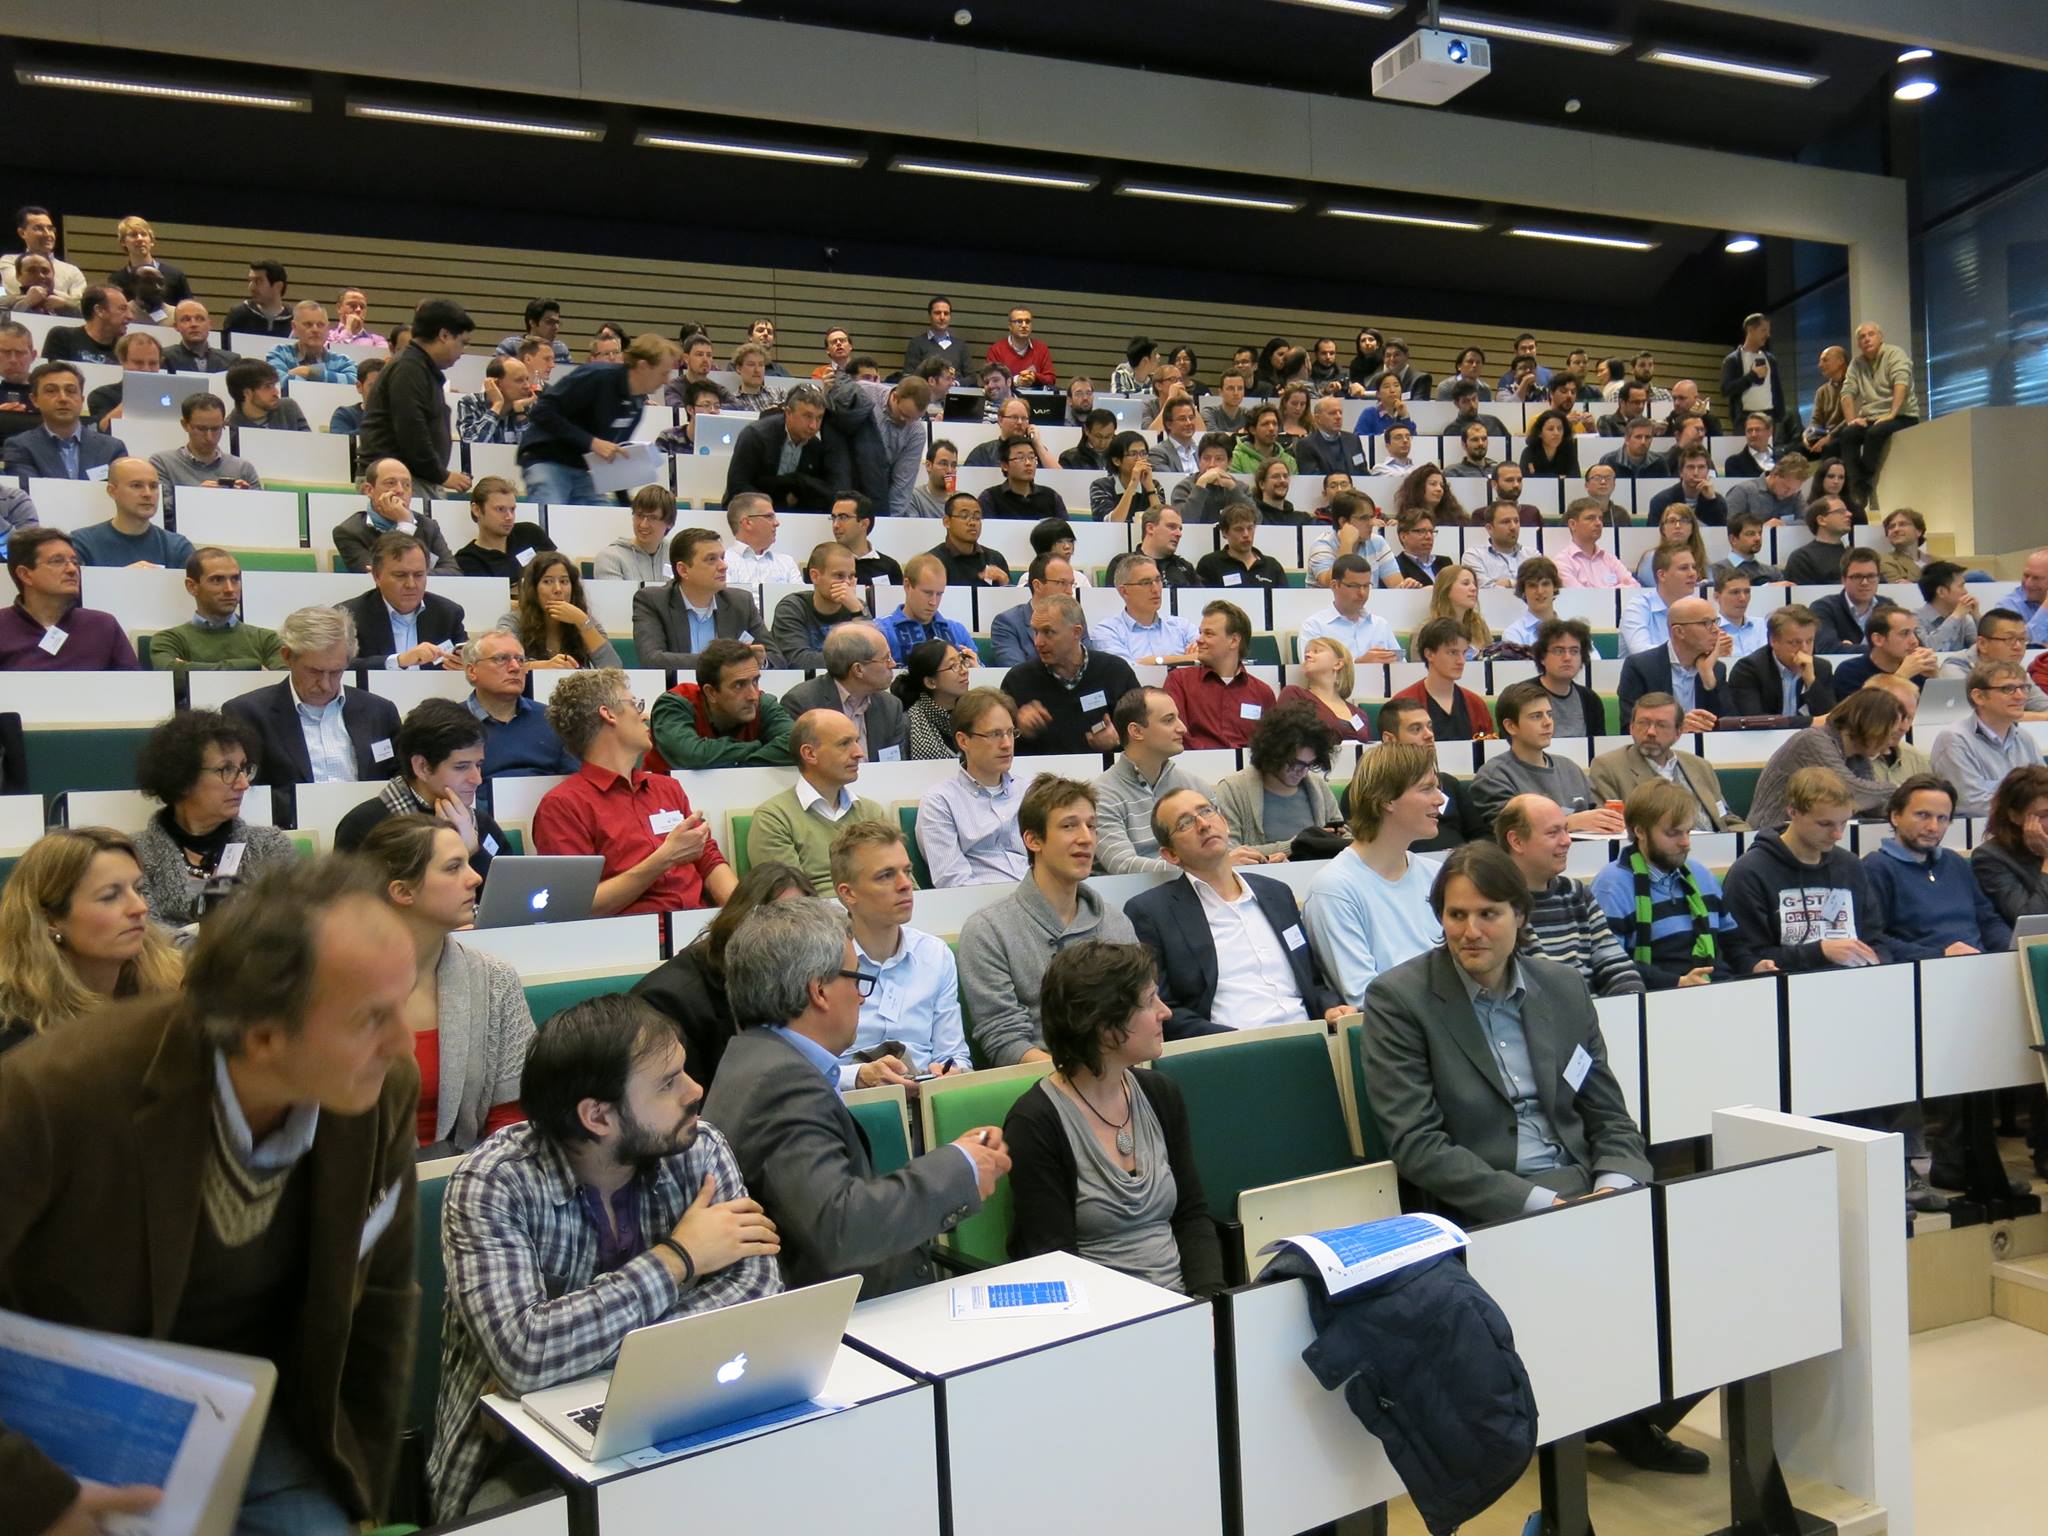 The Delft Data Science crowd